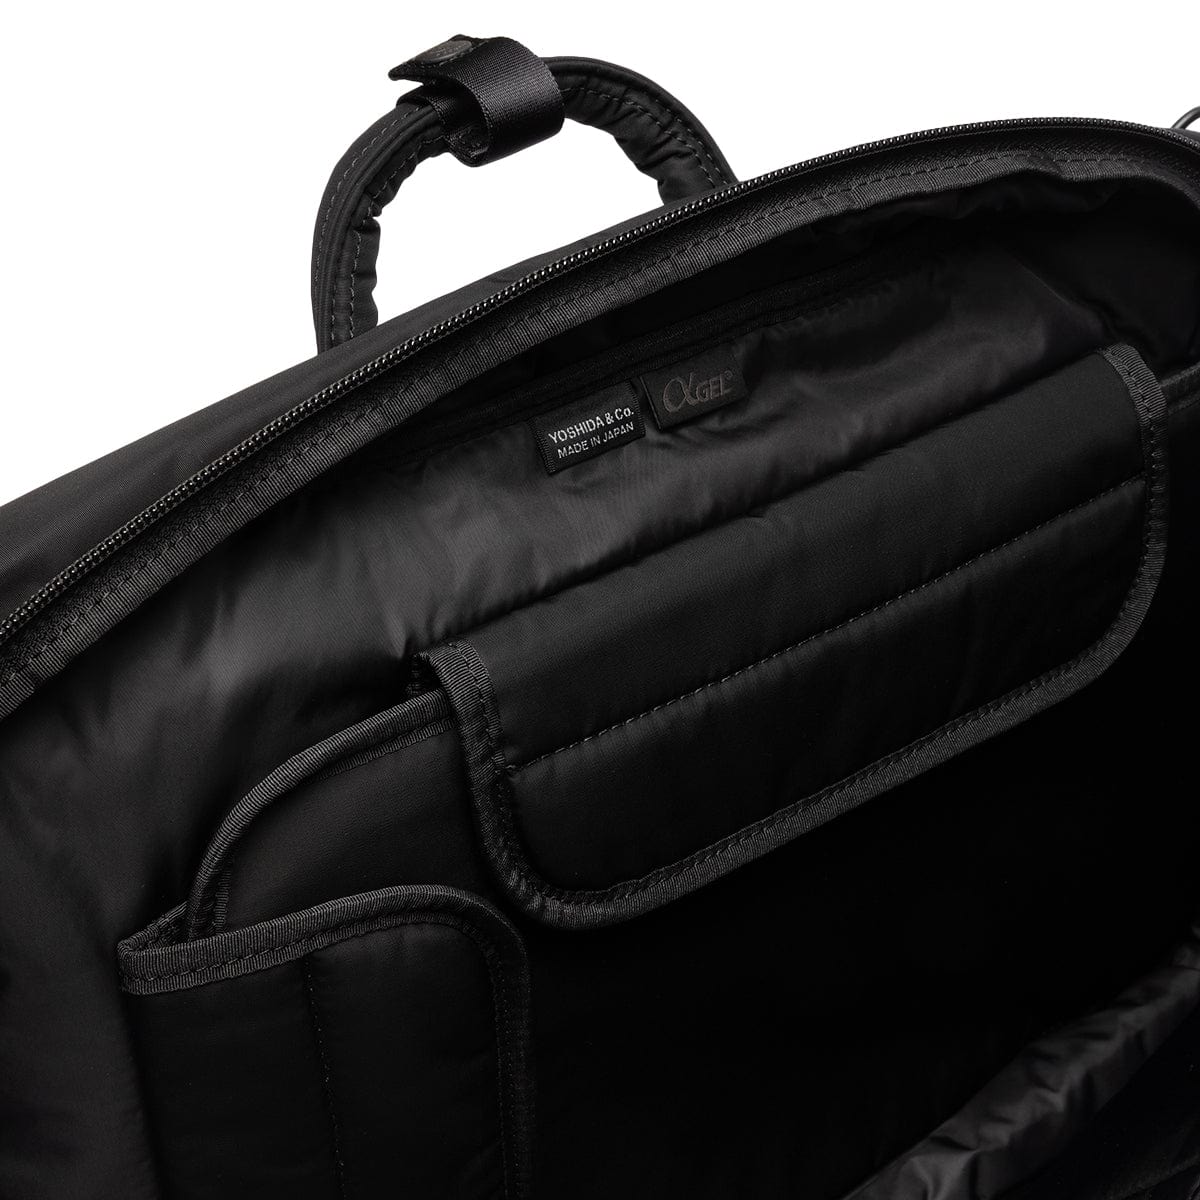 PORTER YOSHIDA & CO Accessories - Bags BLACK / O/S SENSES 2WAY PACK